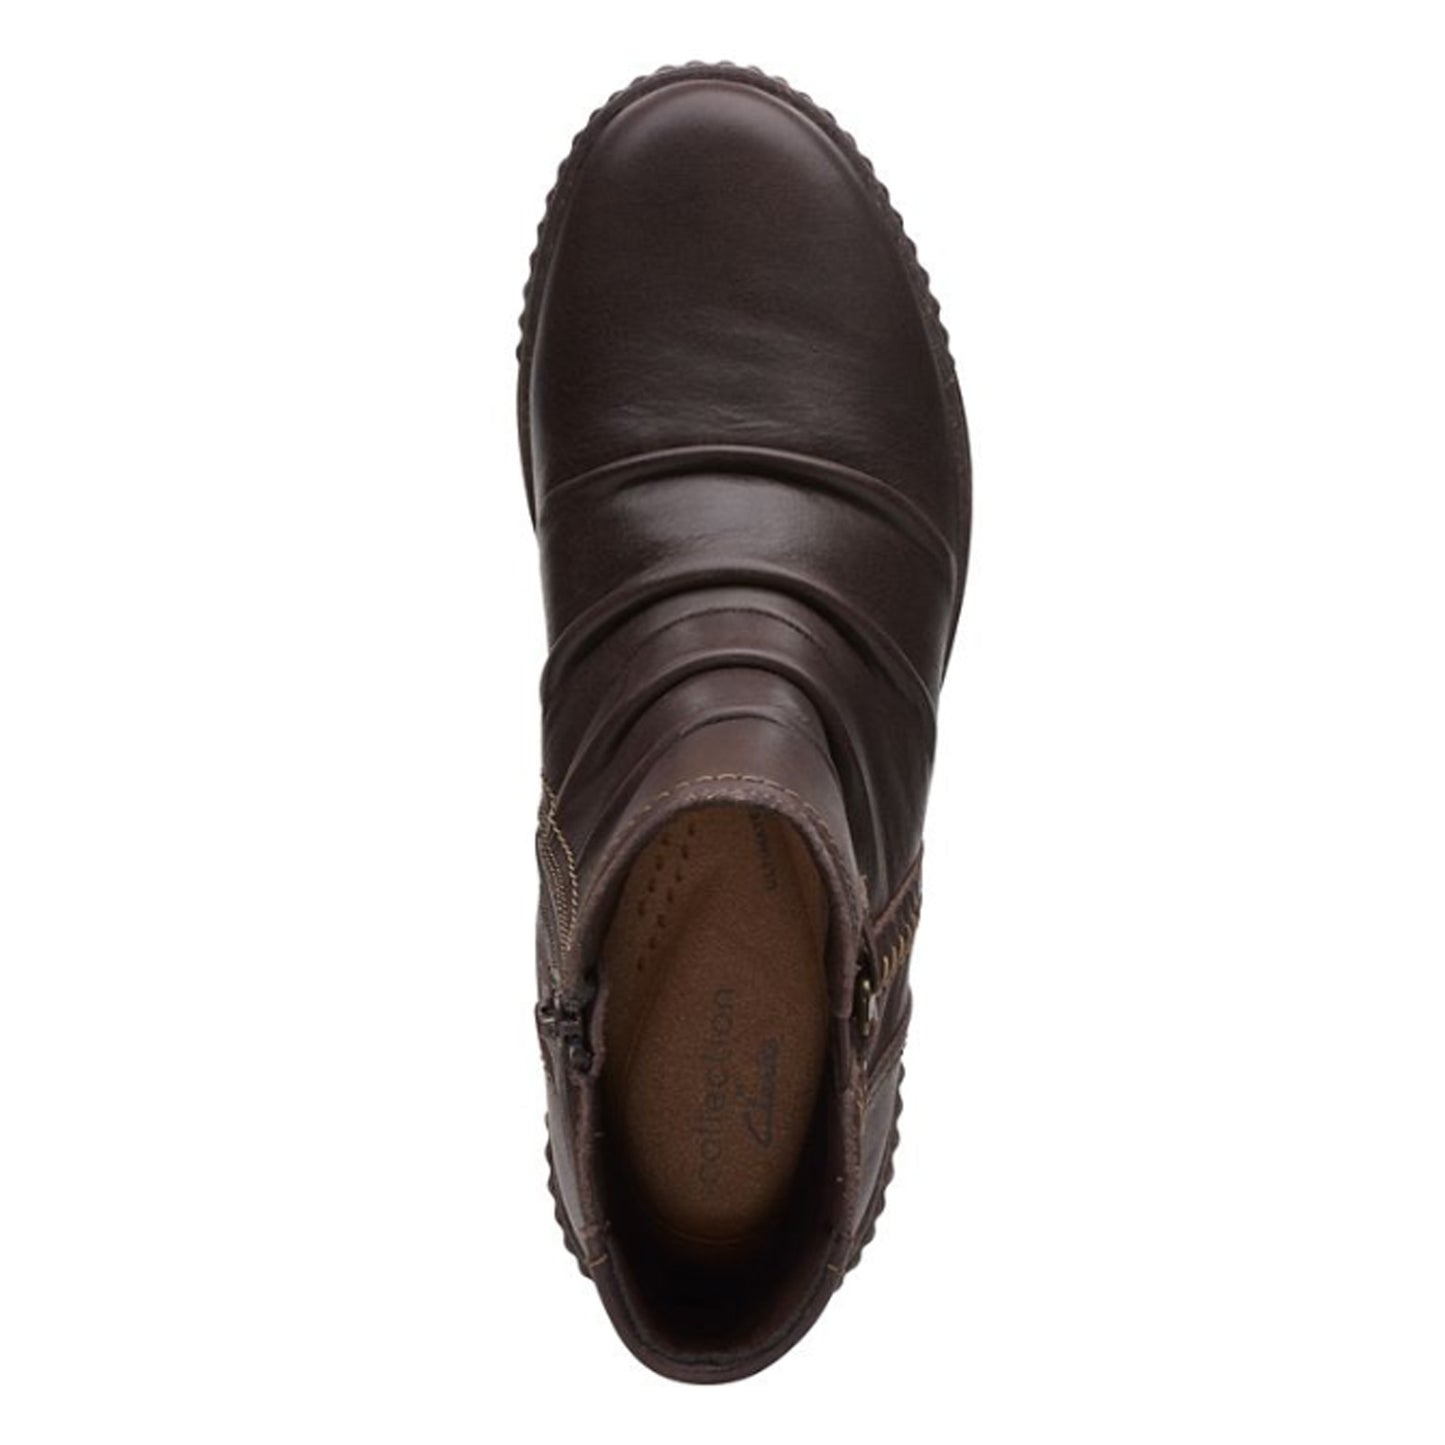 Peltz Shoes  Women's Clarks Caroline Orchid Boot BROWN 26170657